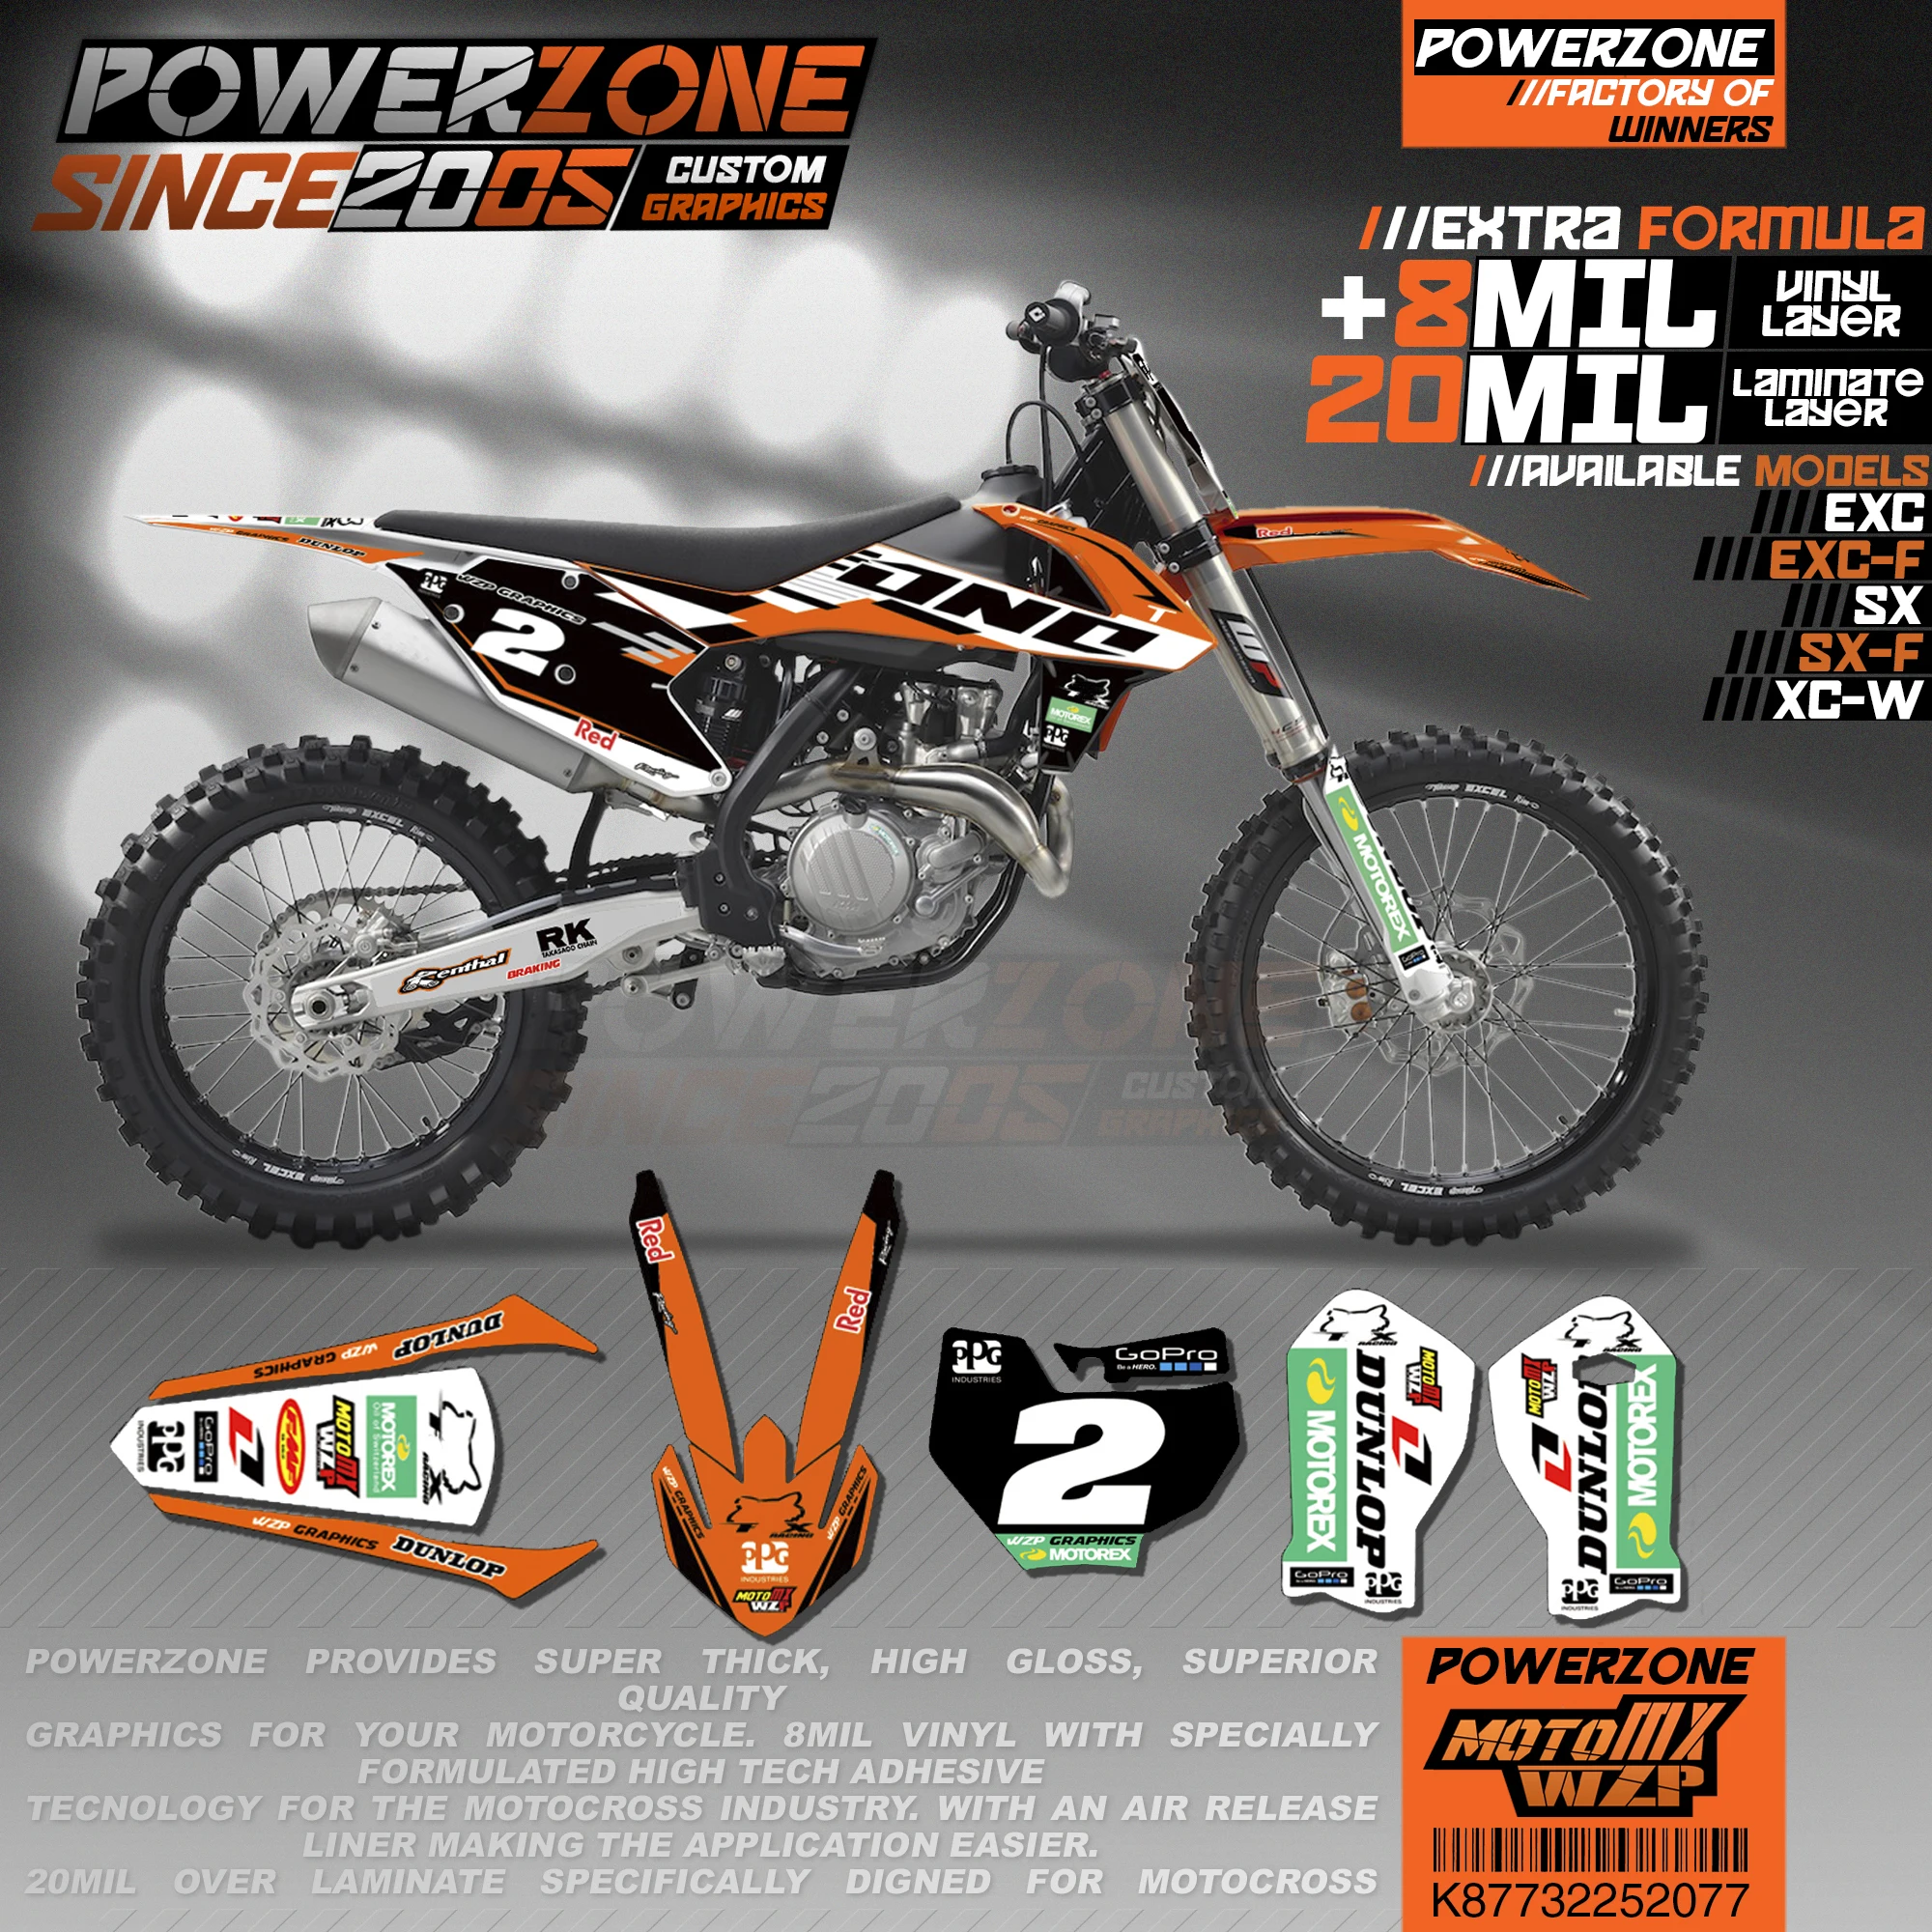 

PowerZone Custom Team Graphics Backgrounds Decals 3M Stickers Kit For KTM SX SXF MX EXC XCW Enduro 125cc to 500cc 2016-2019 077